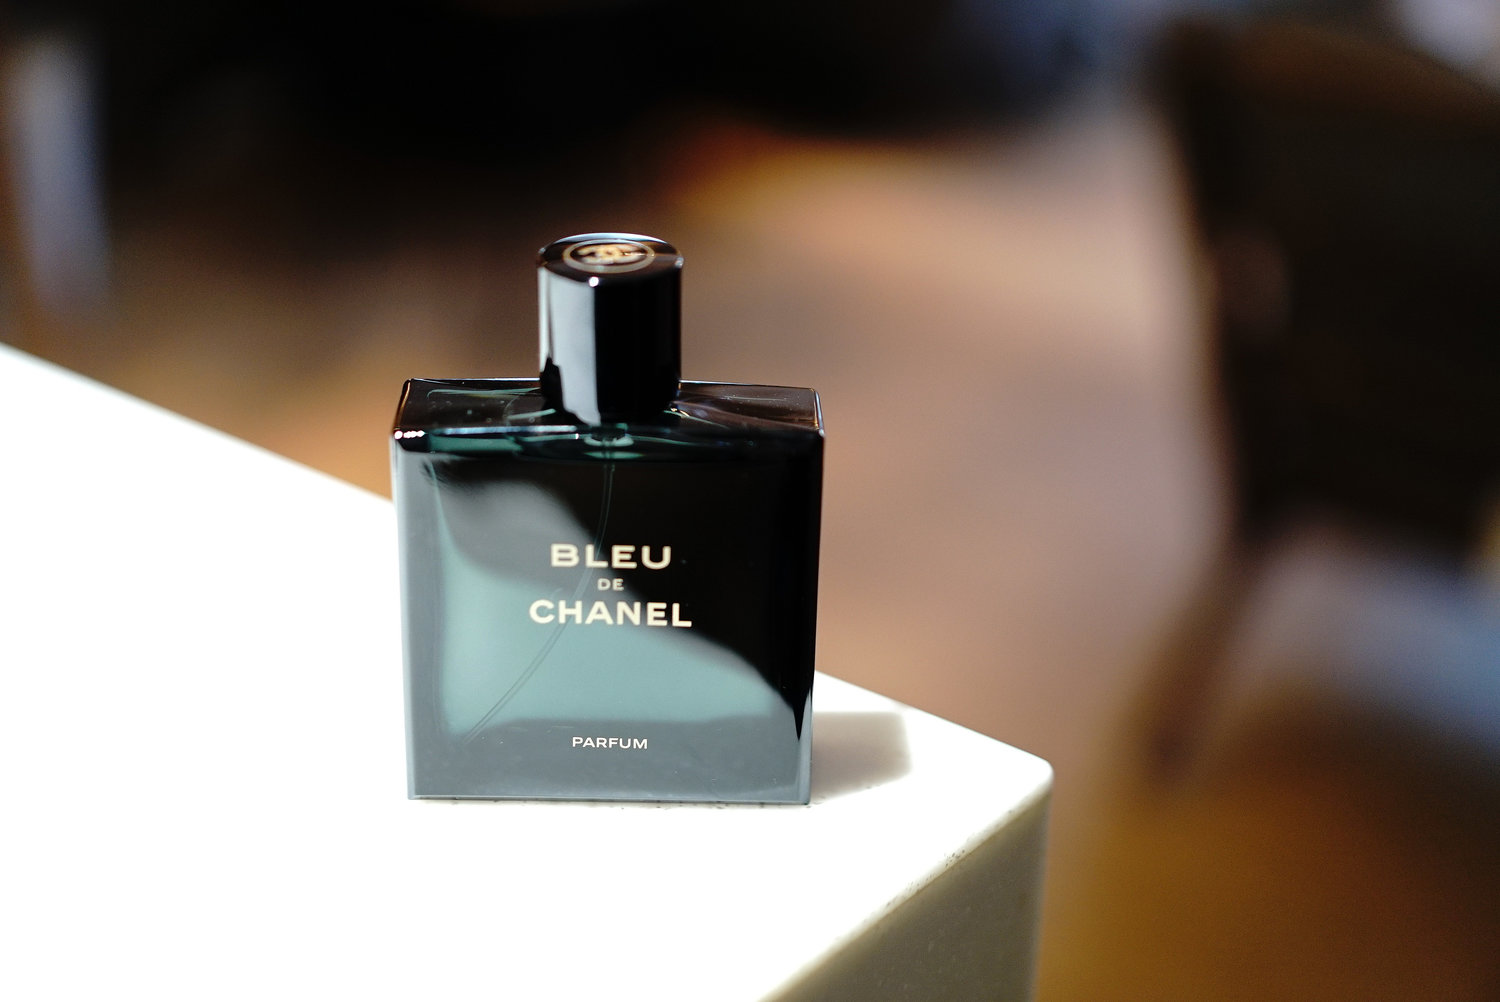 Chanel Bleu de Chanel : Fragrance Review - Bois de Jasmin